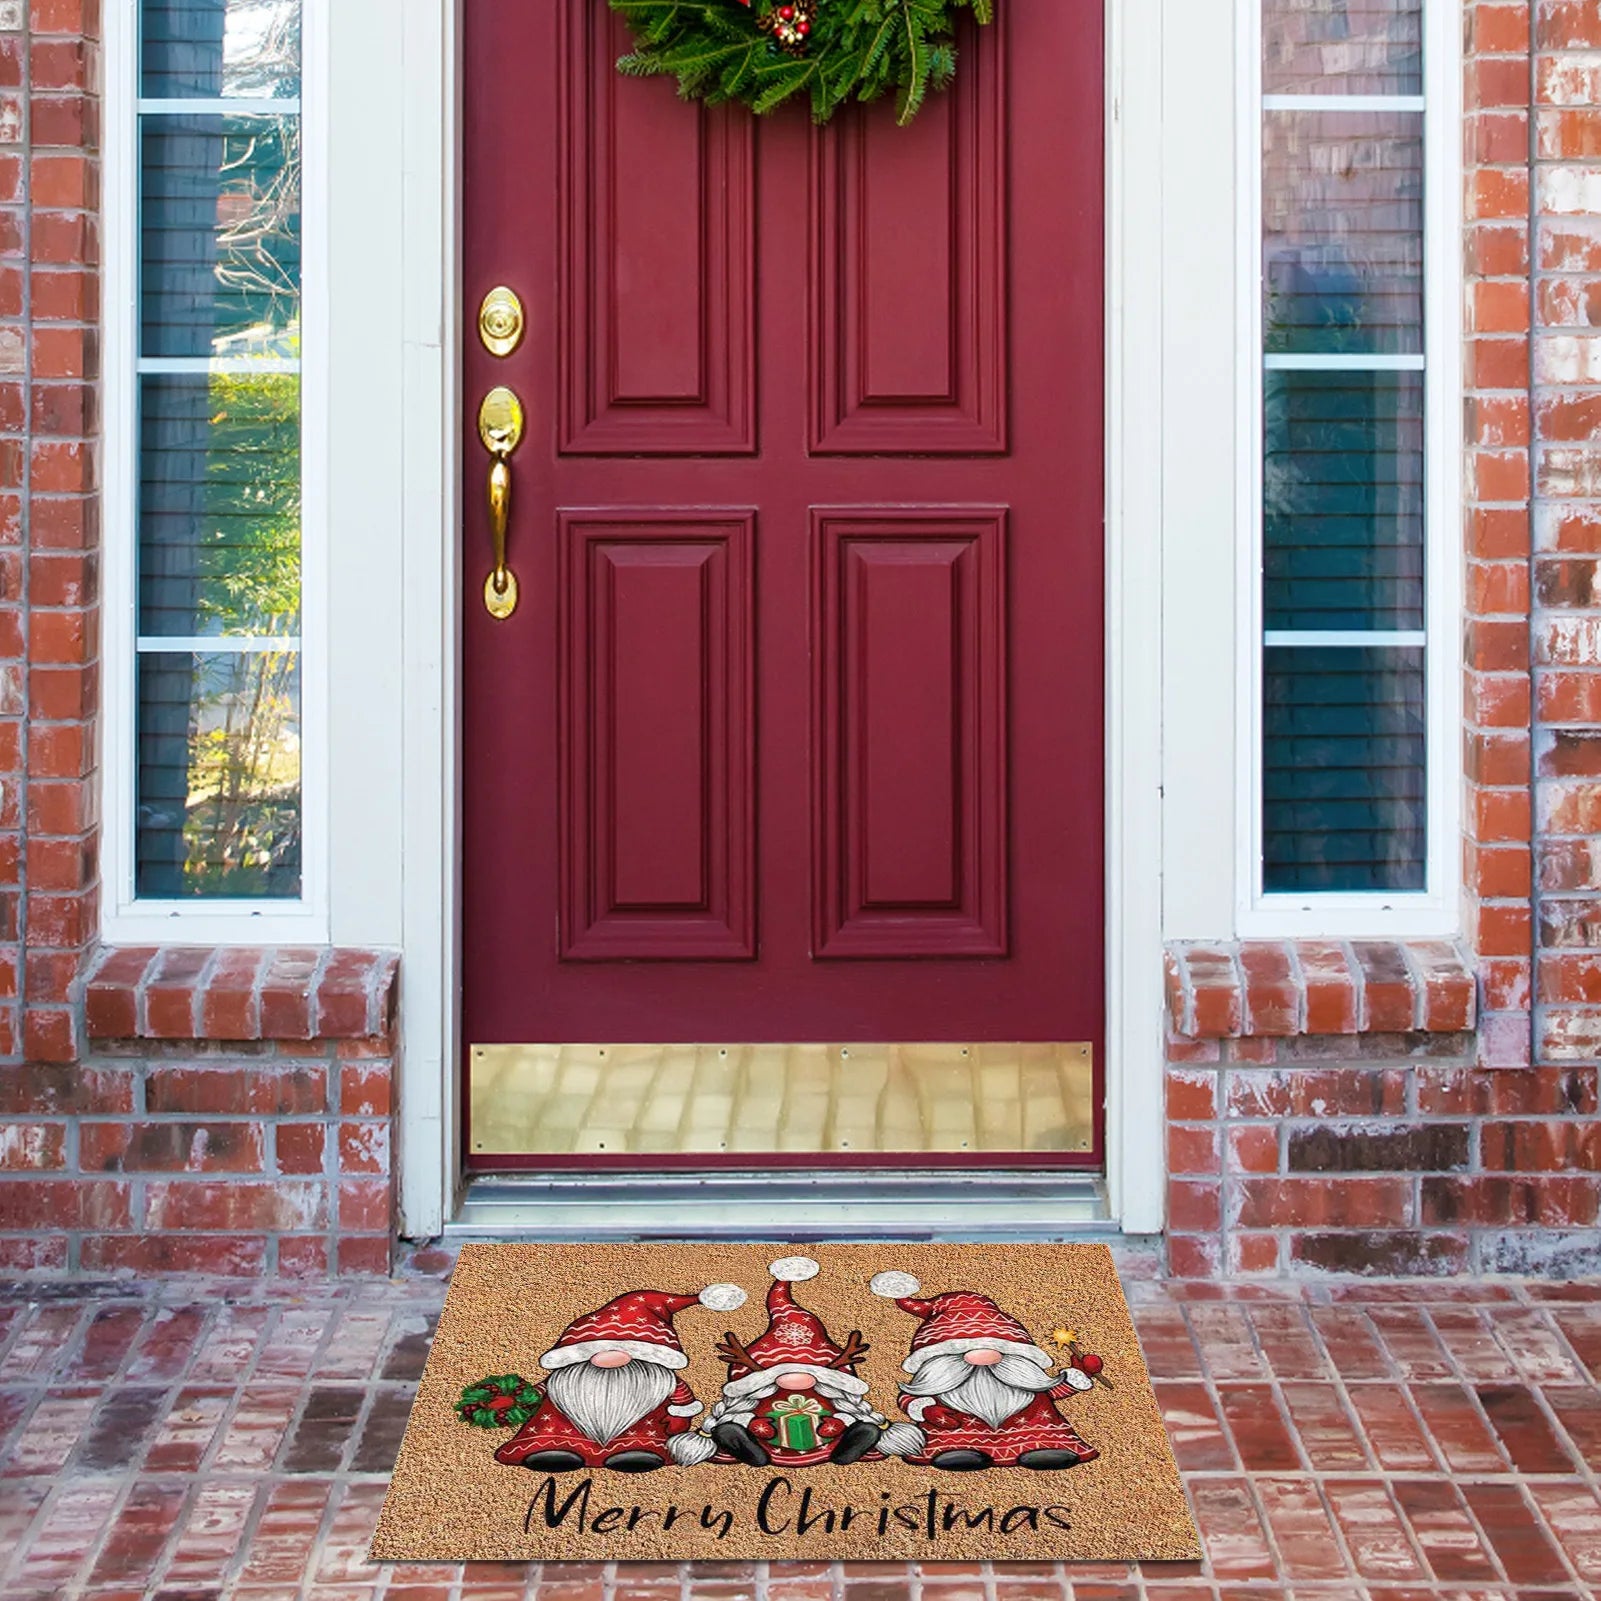 Merry Christmas Welcome Doormat Gnome Doormat Xmas Holiday Welcome Floor Mat Rugs for Front Door Funny Non Slip Rubber Back Winter Home Kitchen ShopOnlyDeal